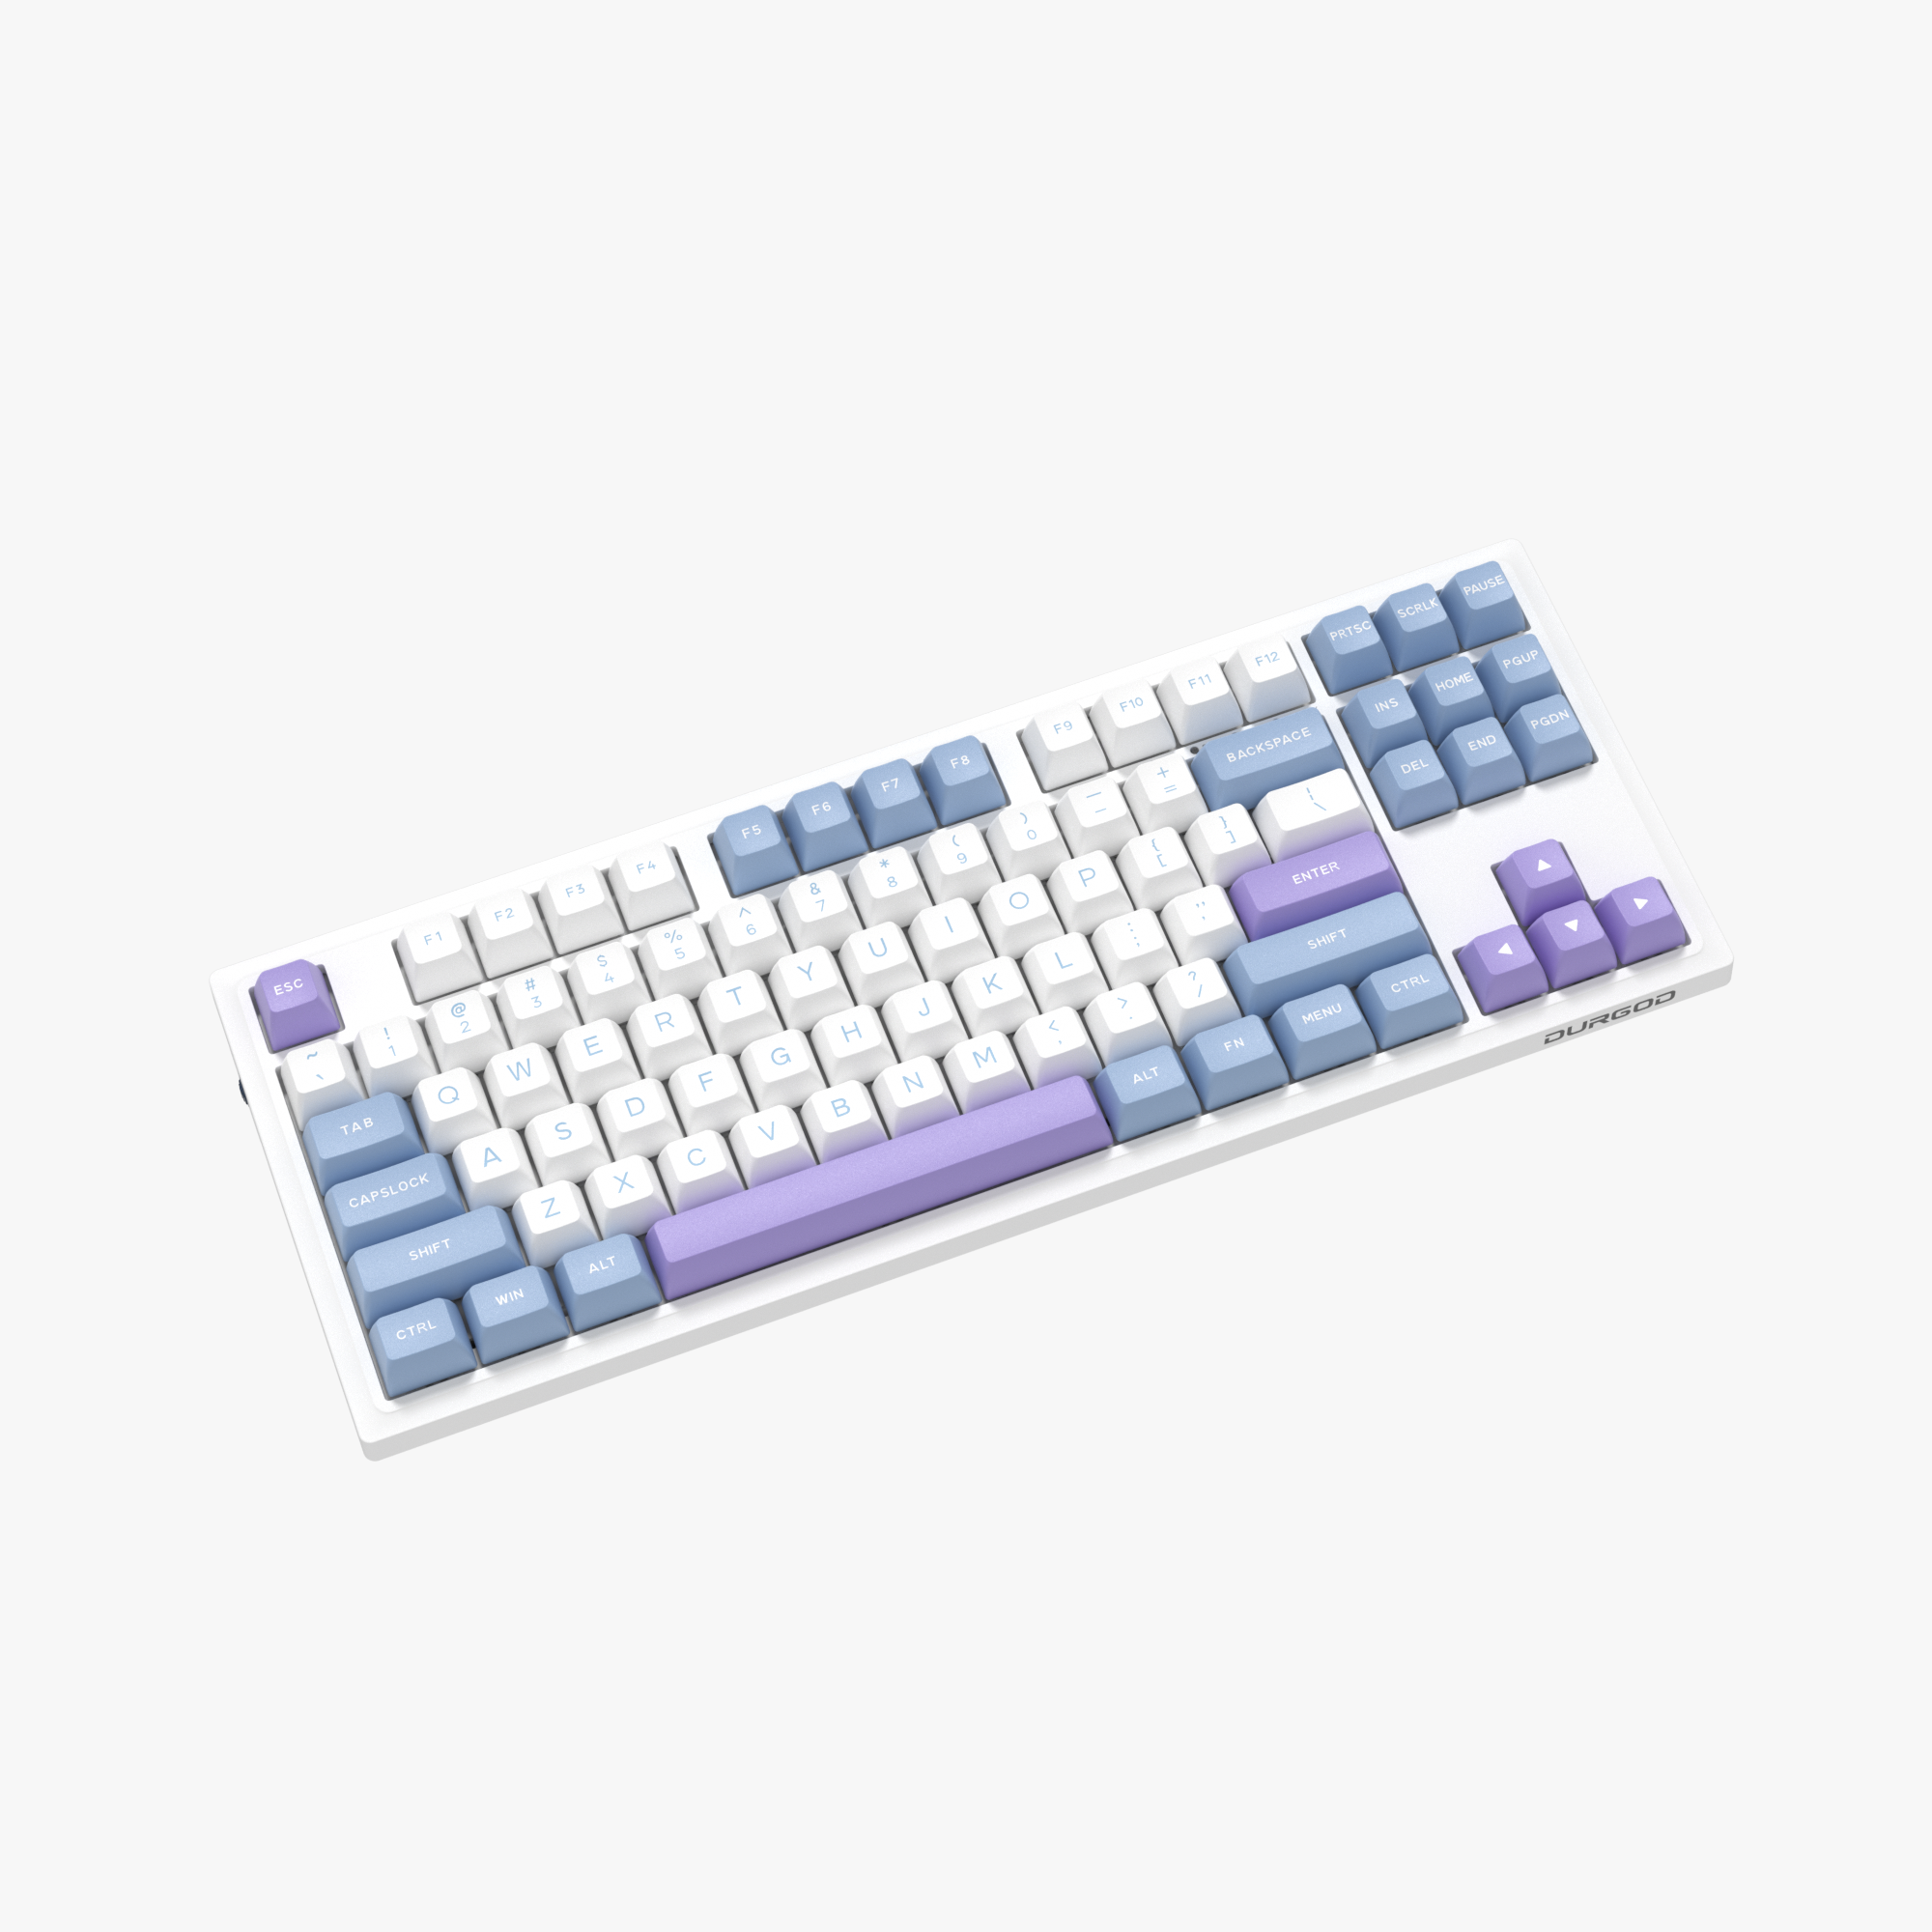 K100w icy smoothie mechanical keyboard 80% mechanical keyboard